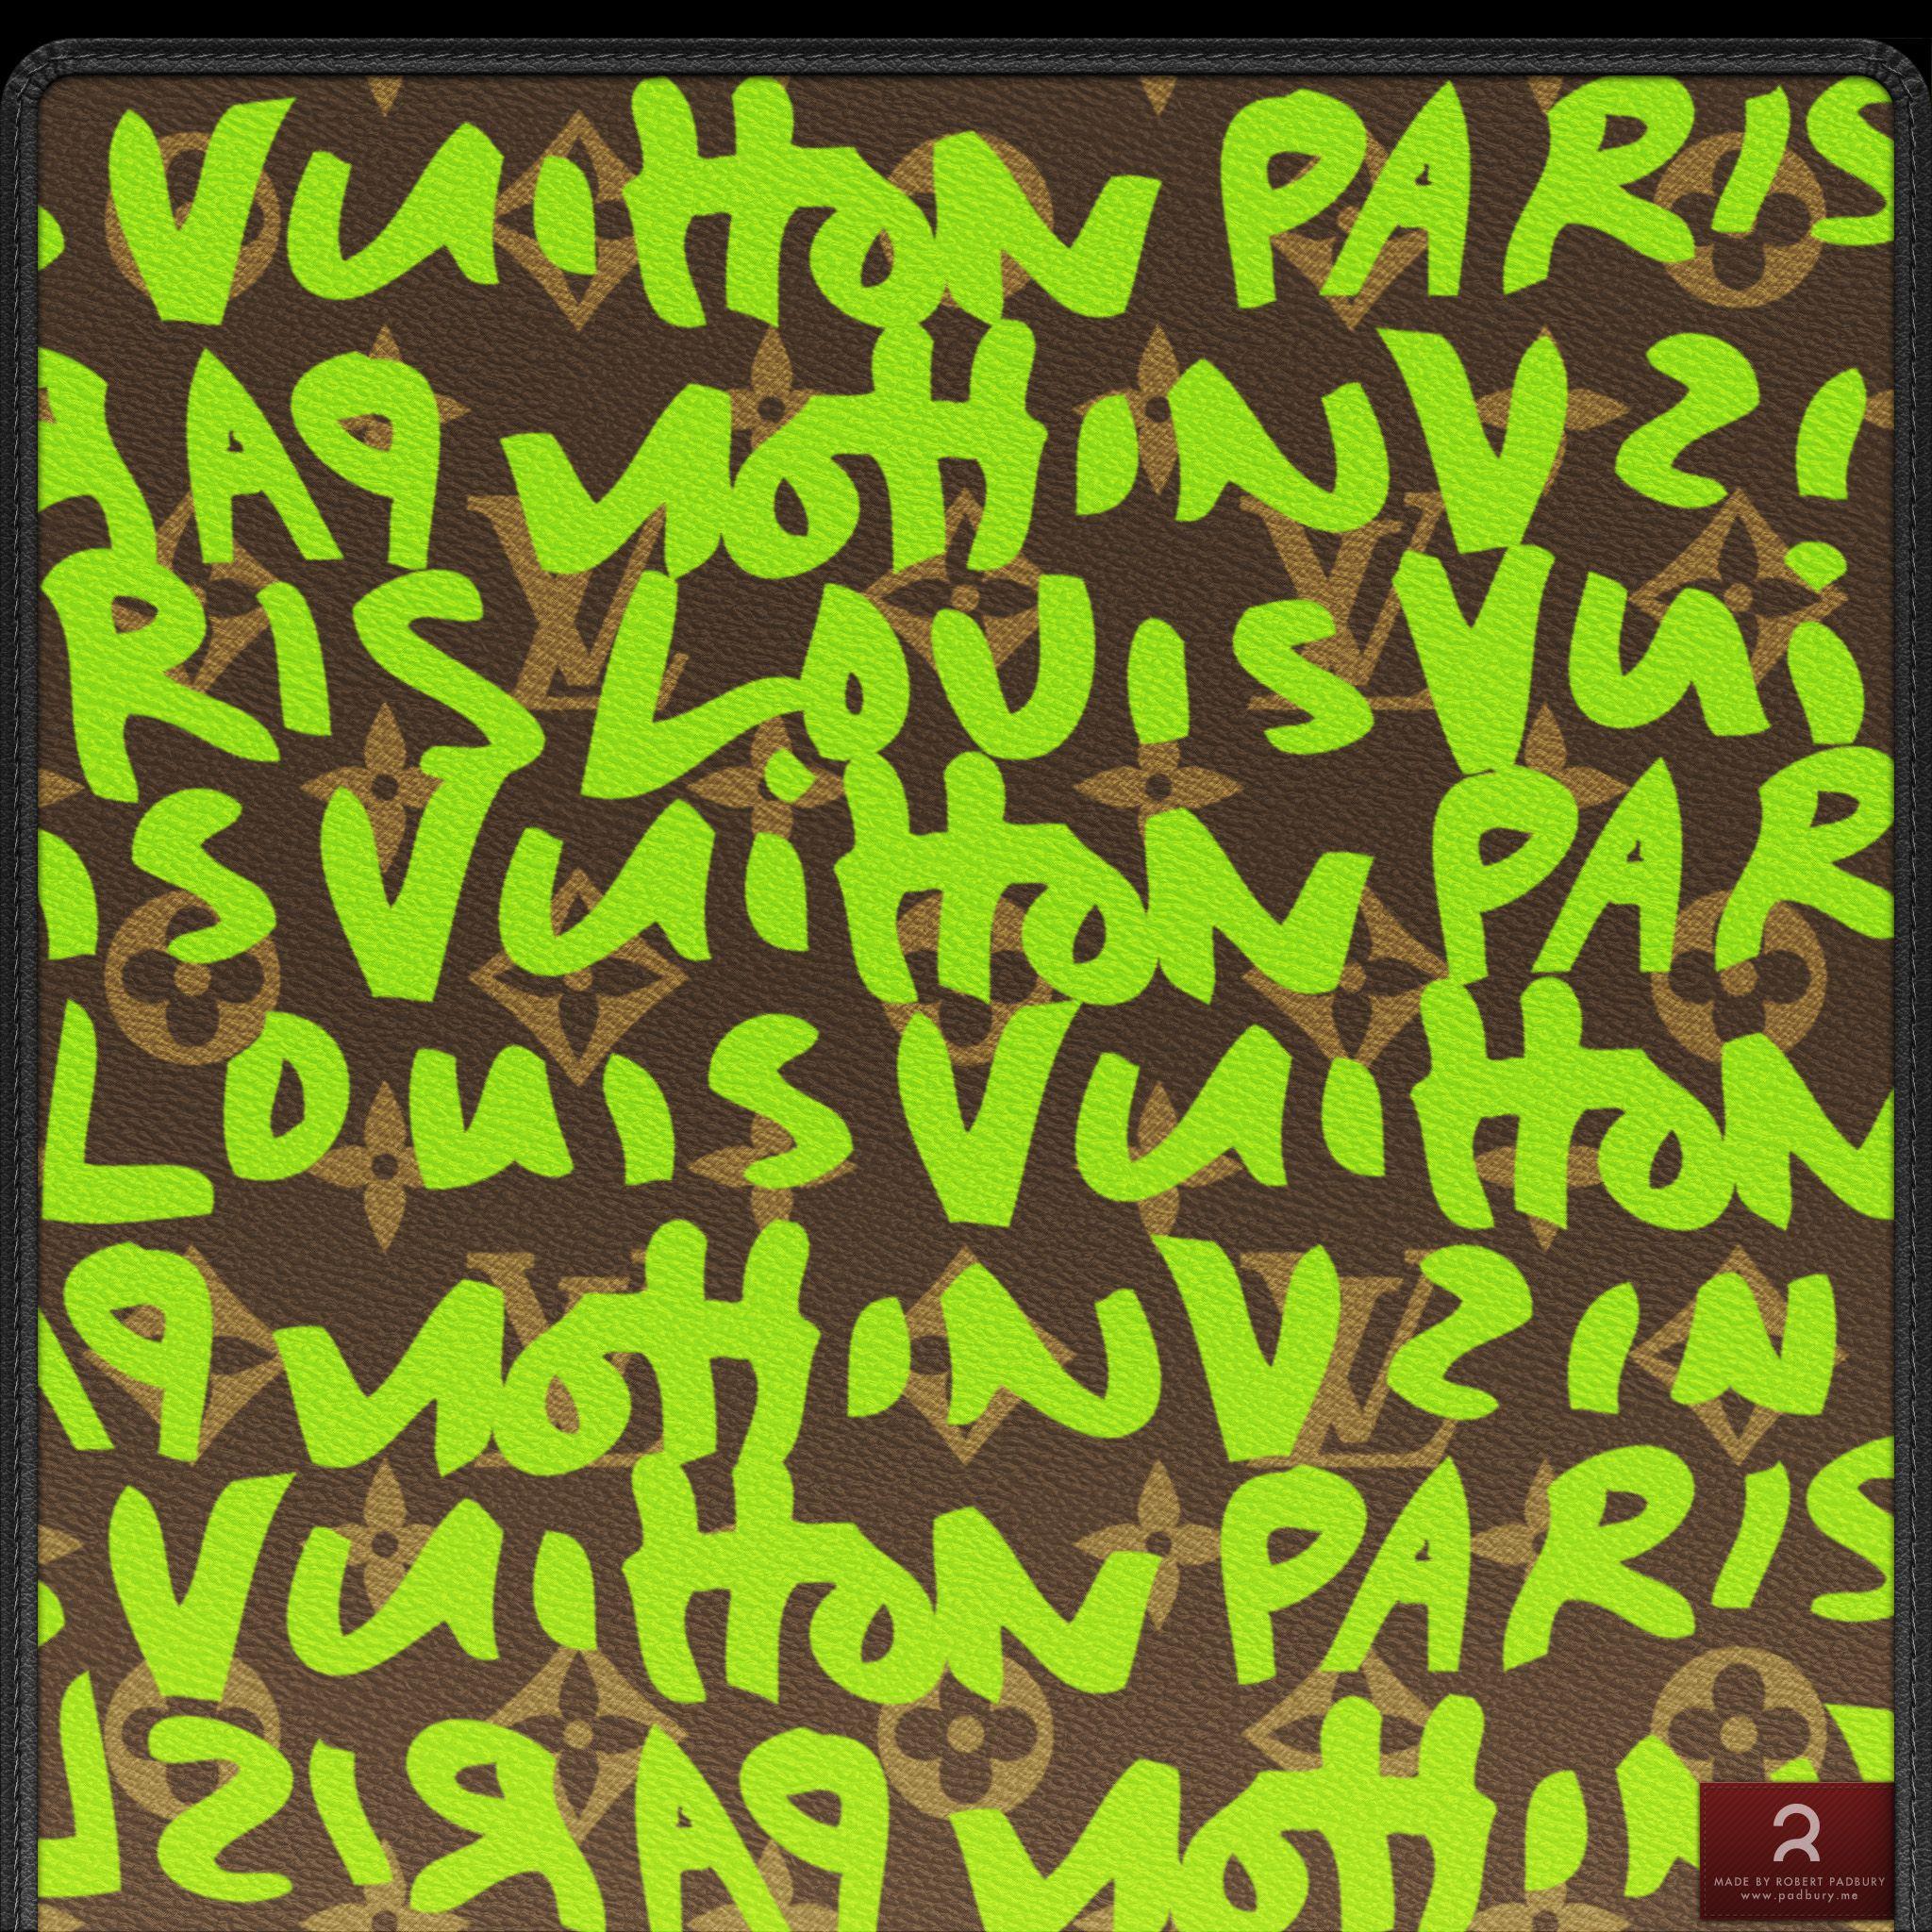 Louis Vuitton Calligraphy by Robert Padbury on Dribbble